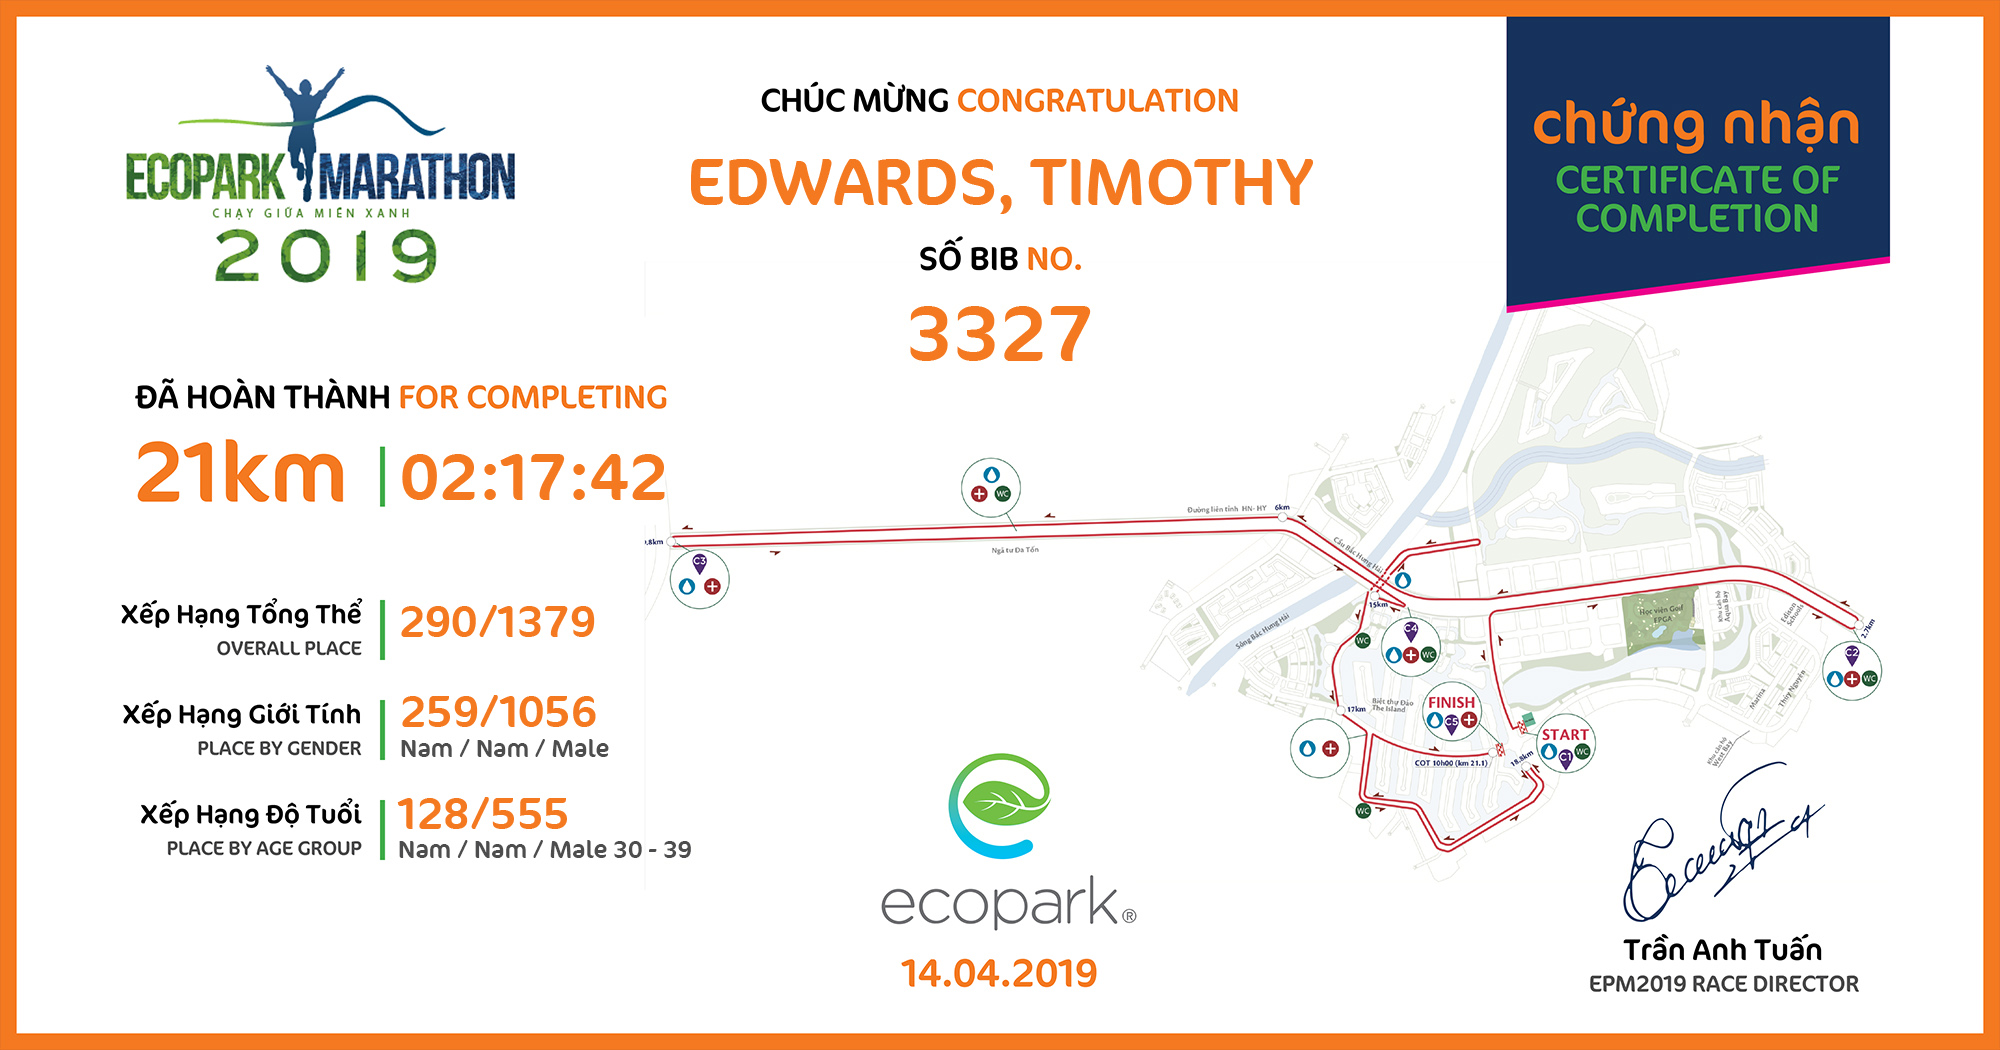 3327 - Edwards, Timothy